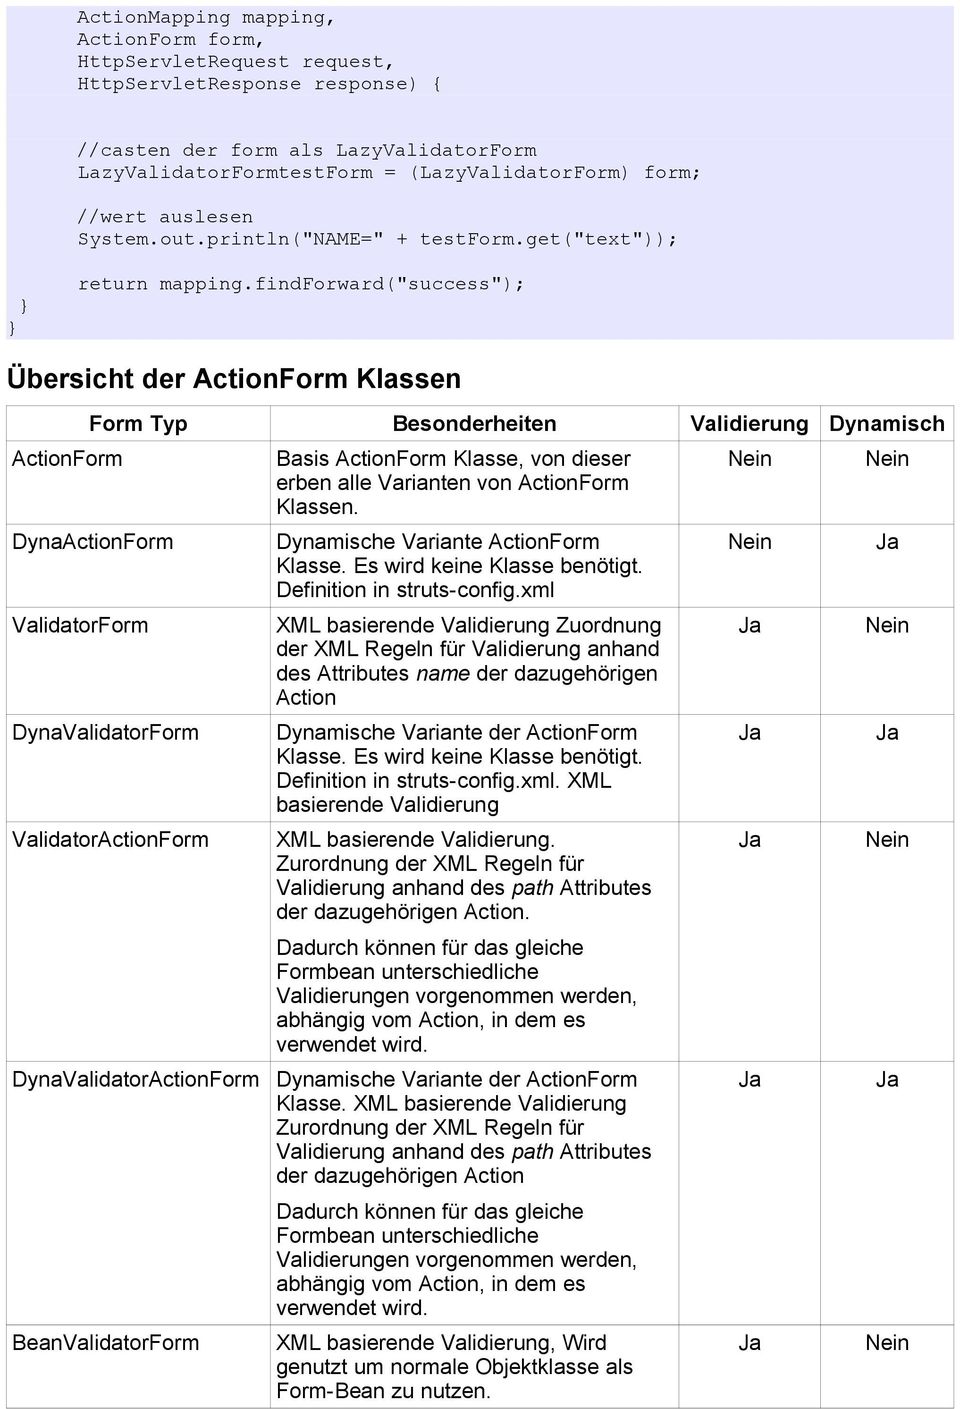 BeanValidatorForm Basis ActionForm Klasse, von dieser erben alle Varianten von ActionForm Klassen. Dynamische Variante ActionForm Klasse. Es wird keine Klasse benötigt. Definition in struts-config.